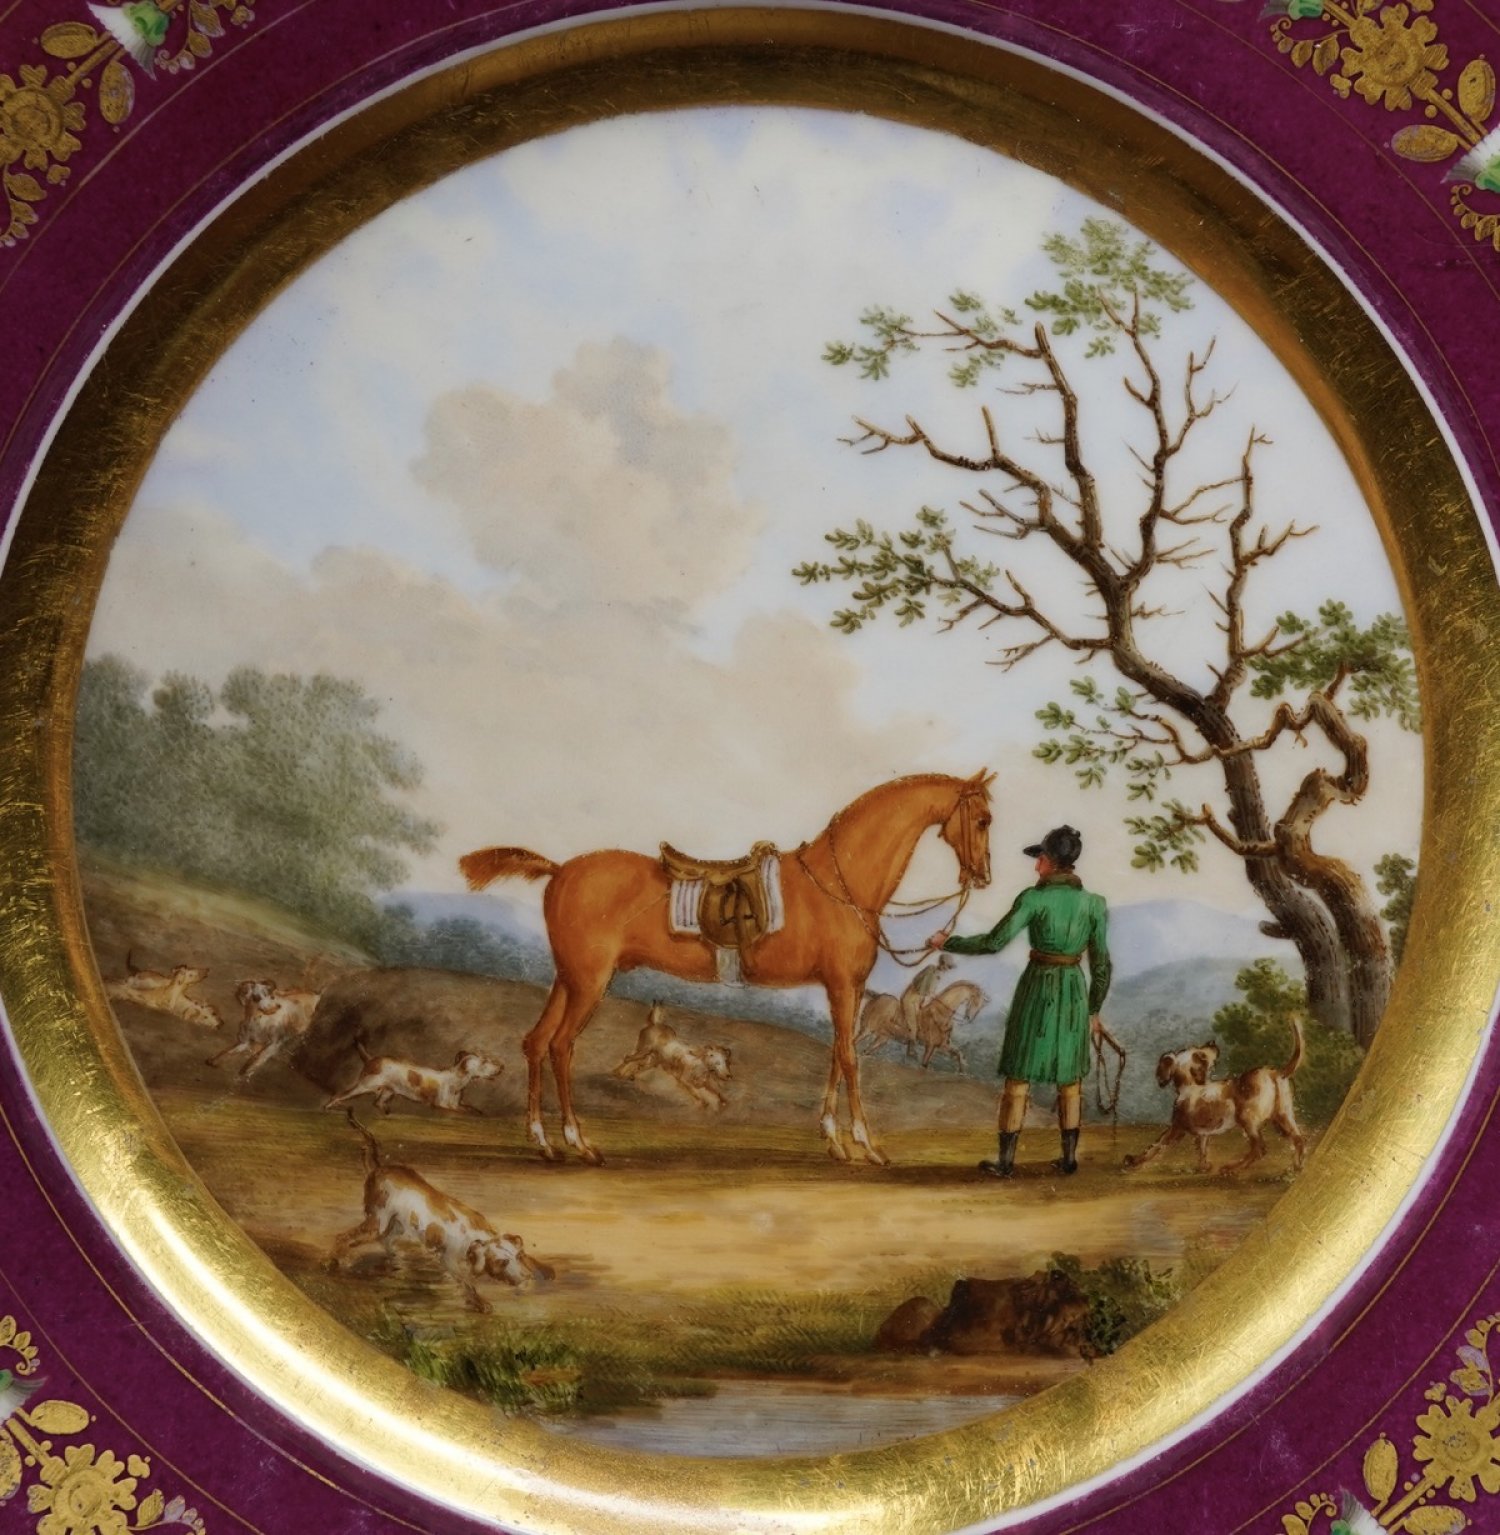 Paris Porcelain plate with superb hunt scene, prob. Nast, circa 1810